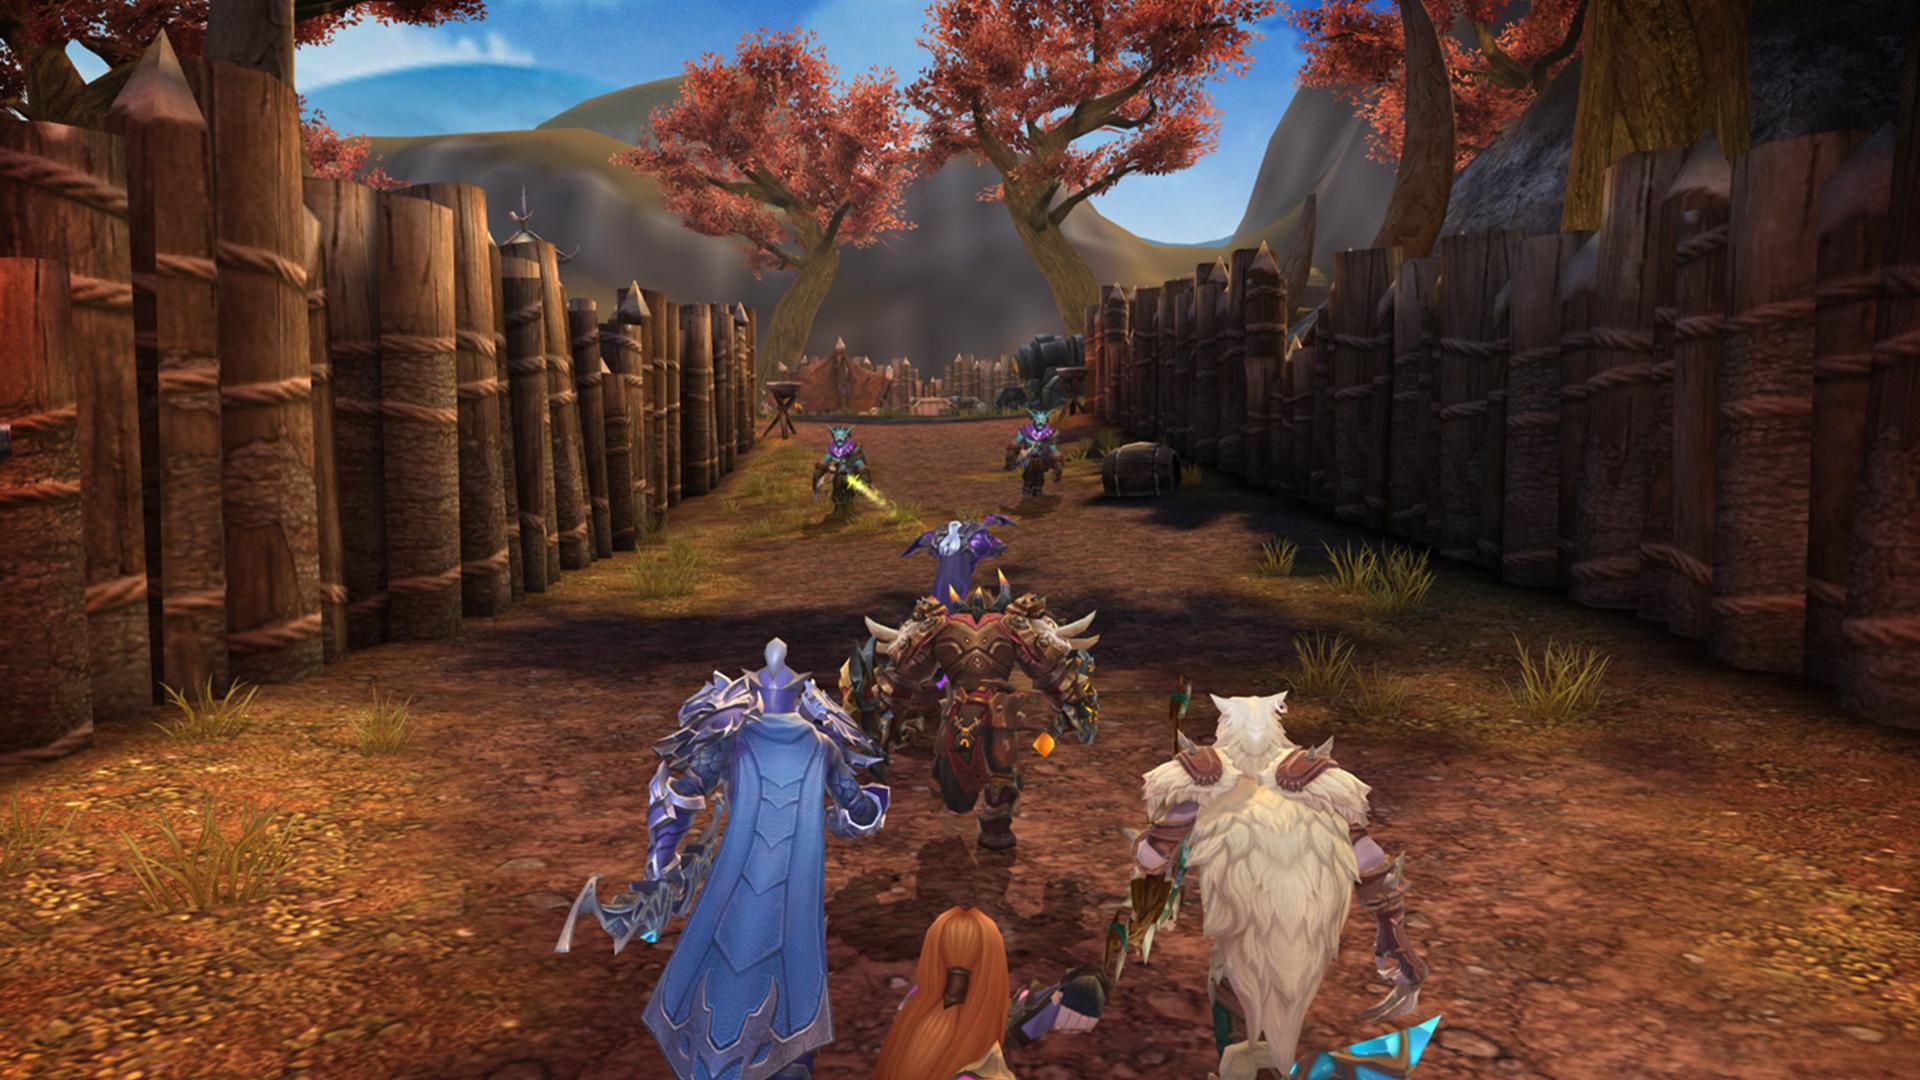 Screenshot №4 from game Crusaders of Light